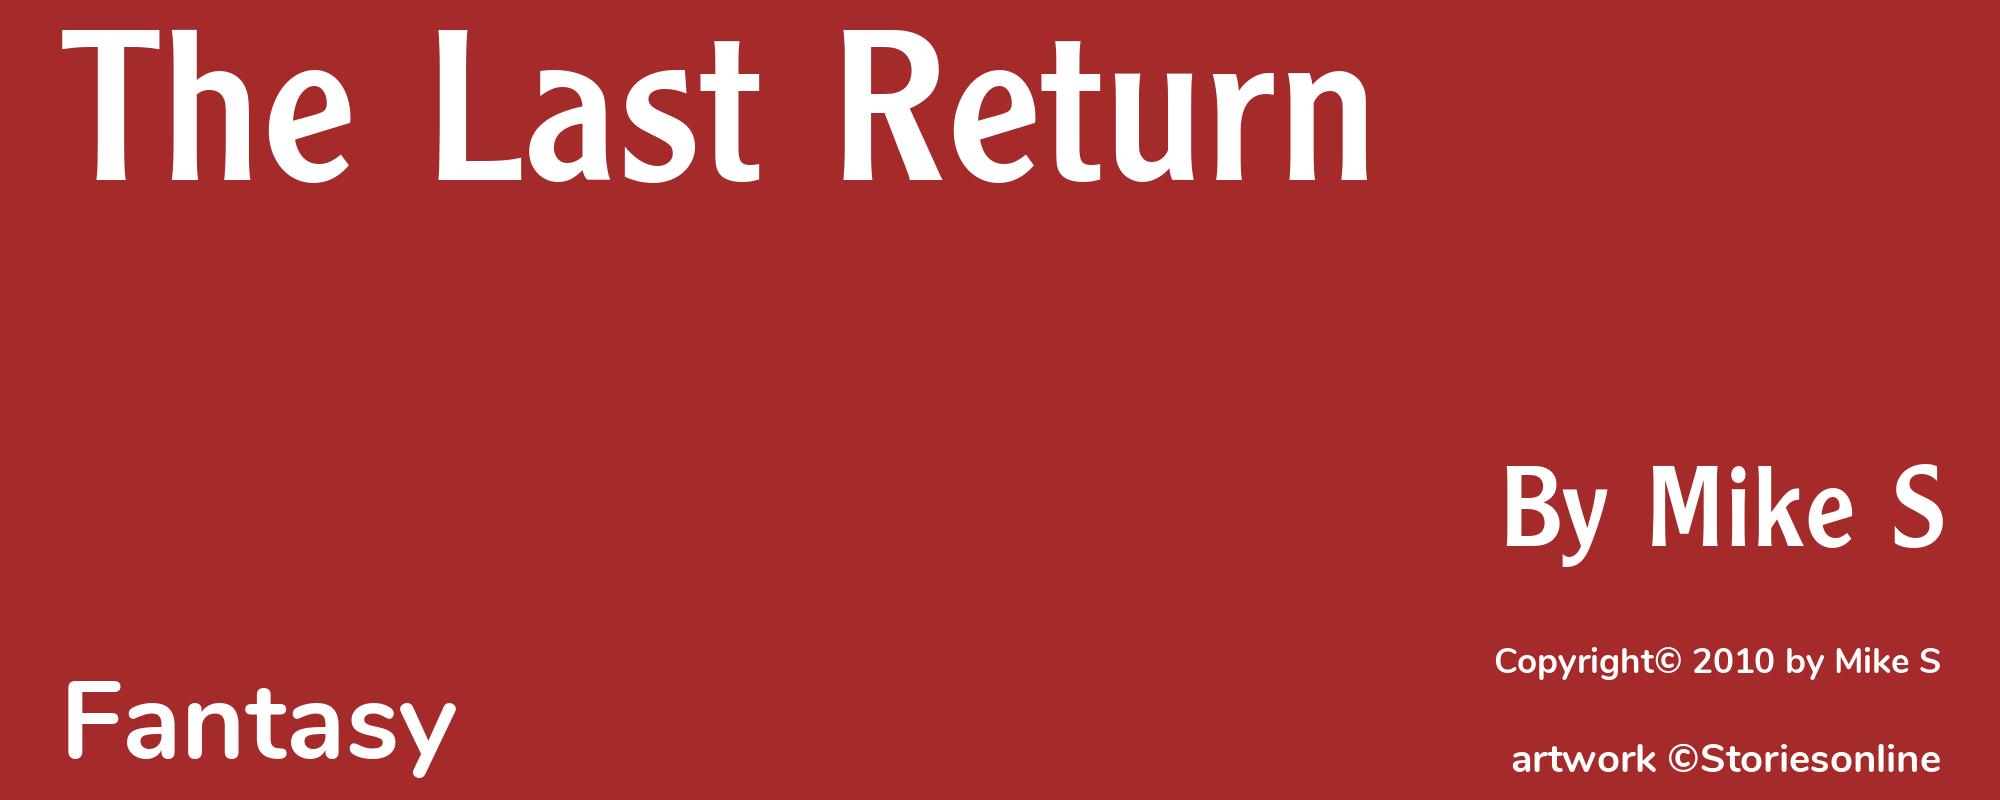 The Last Return - Cover